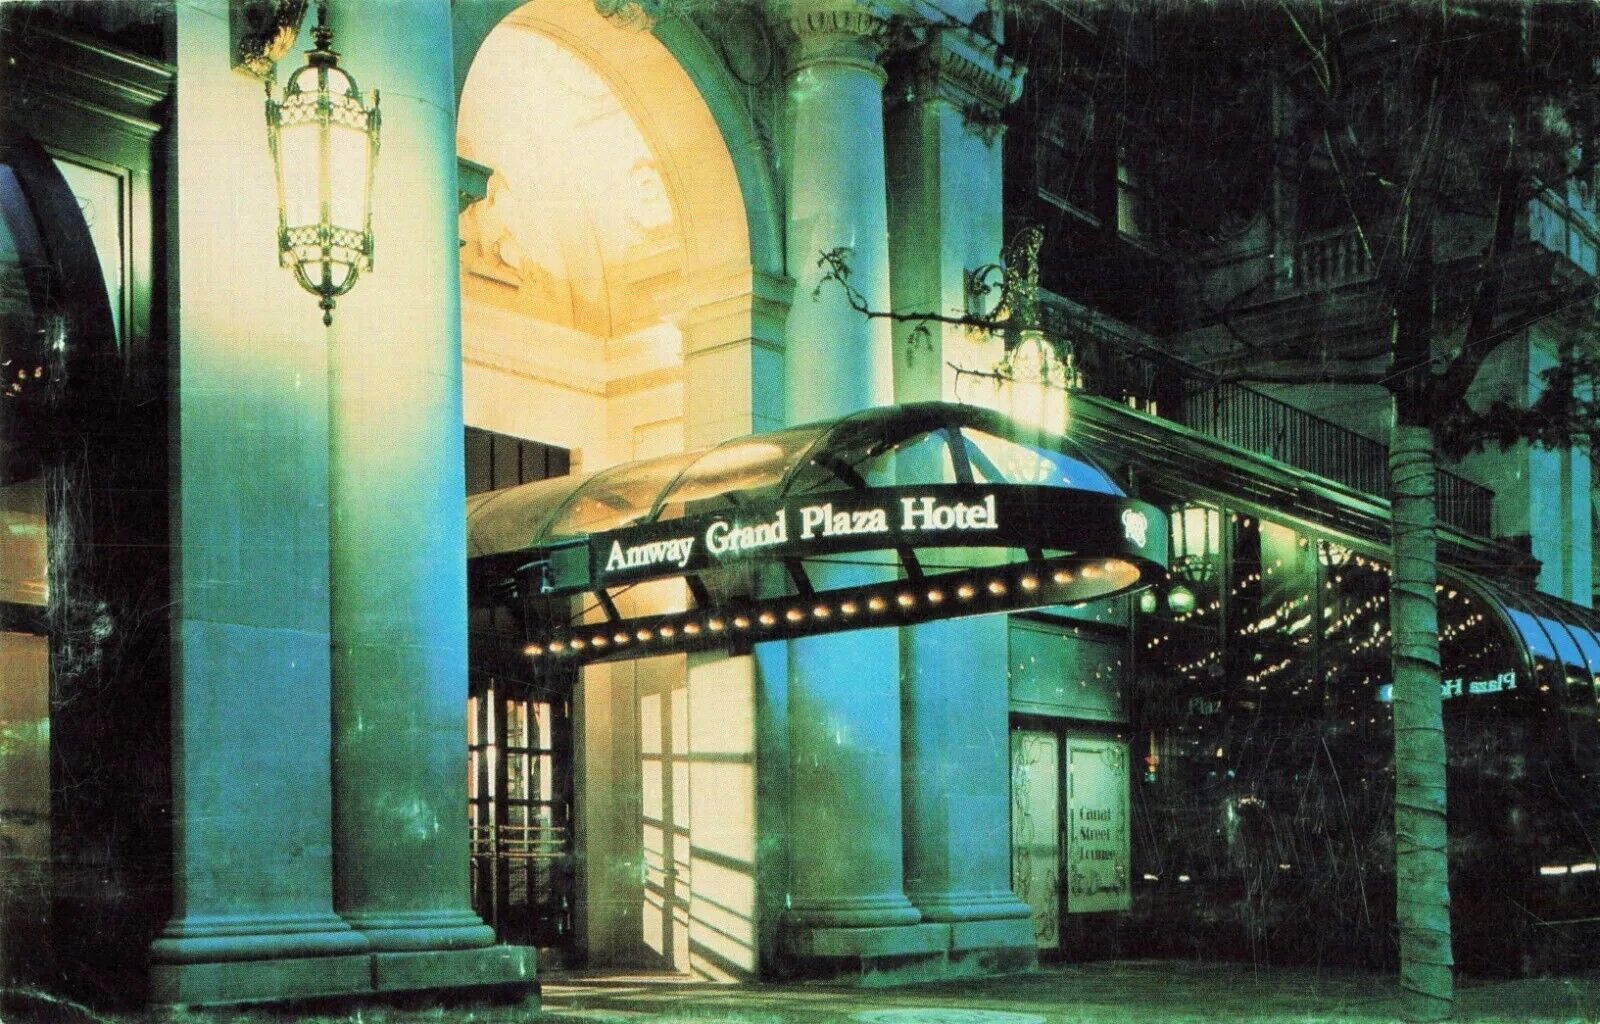 Amway Grand Plaza Hotel - Grand Rapids Michigan MI - Postcard